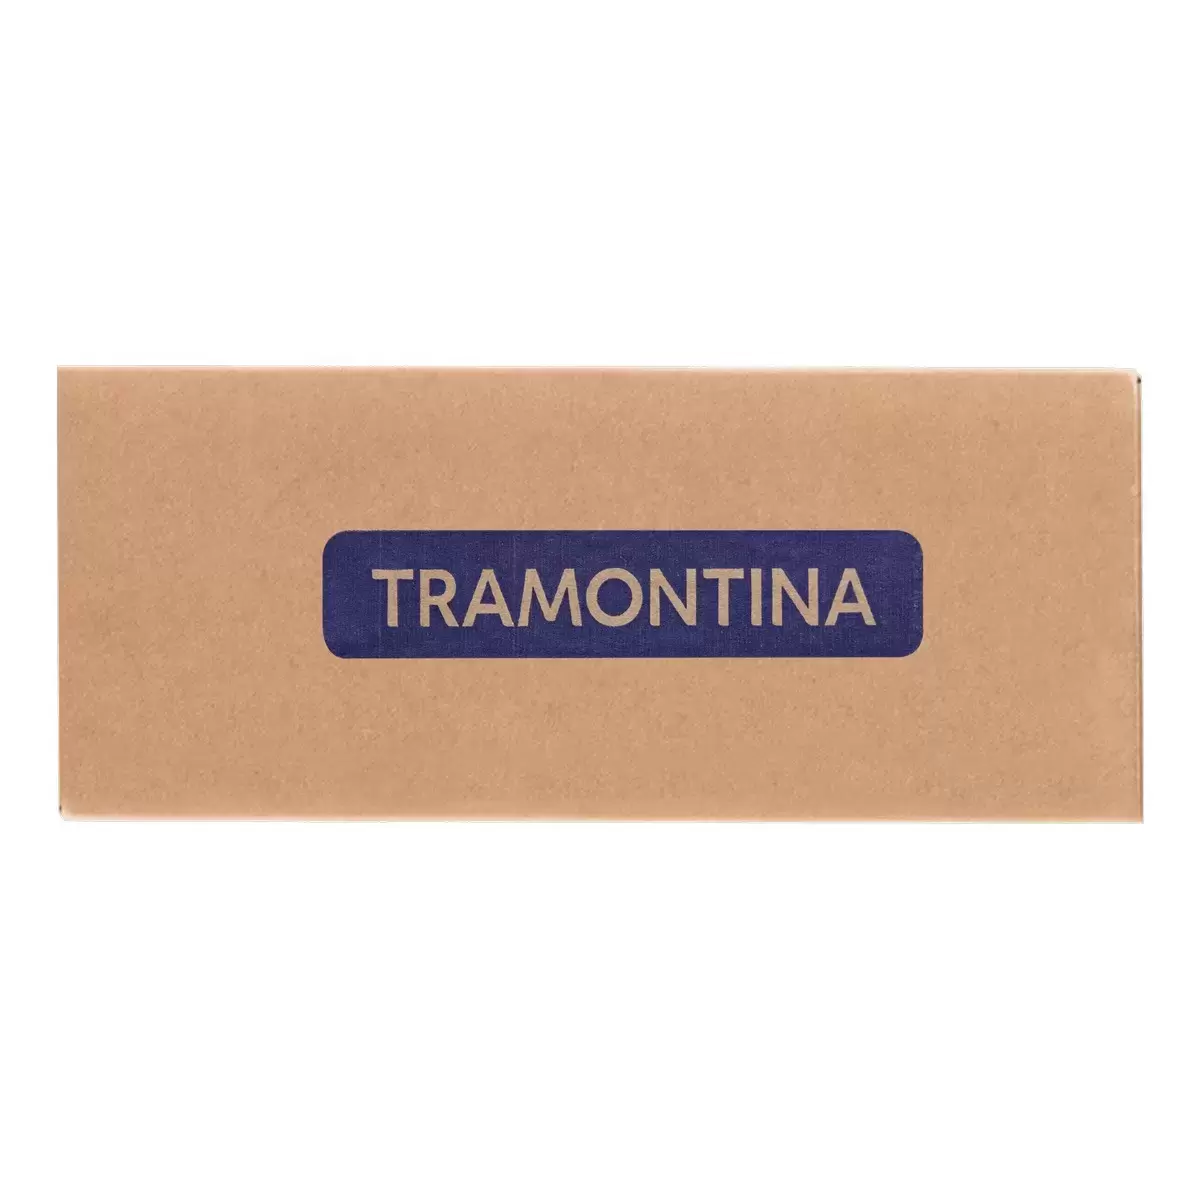 Tramontina 不鏽鋼餐刀 420件組